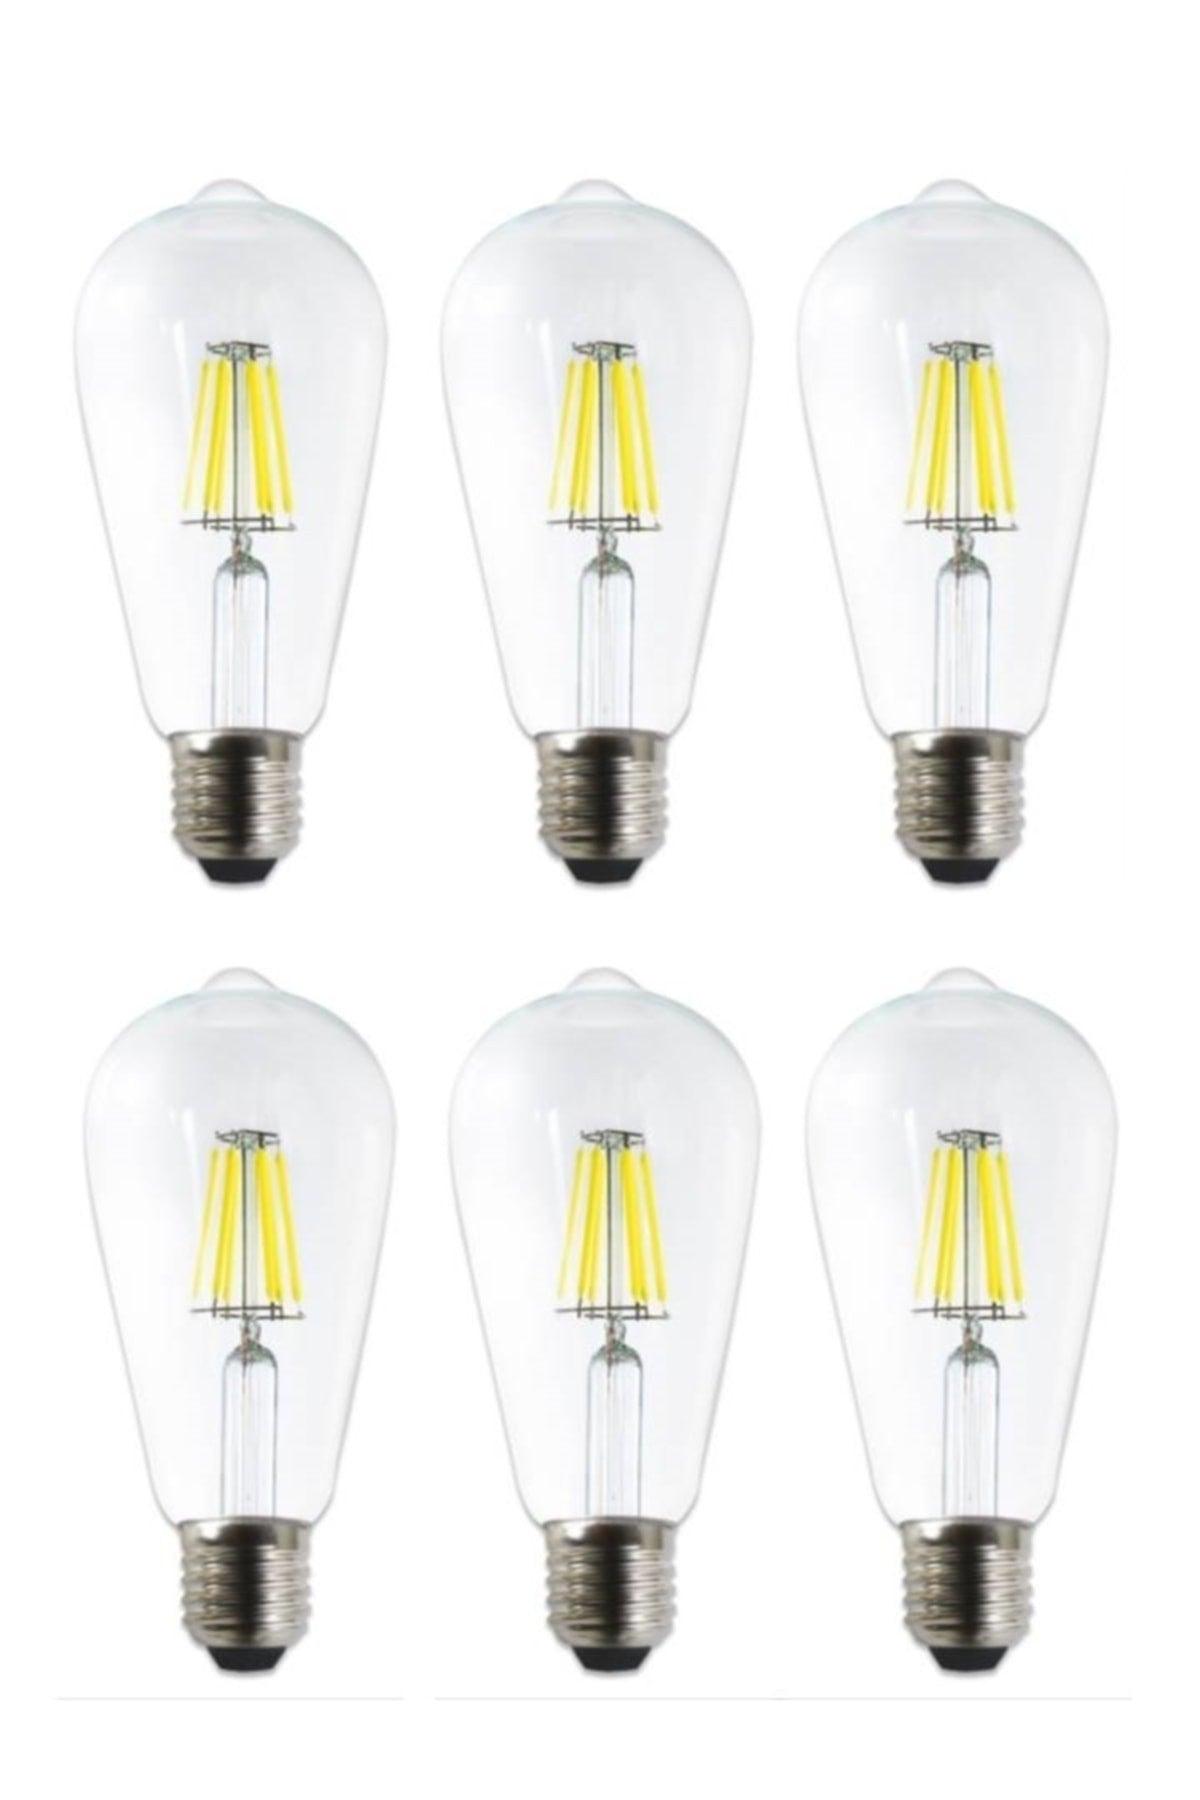 6w Filament Rustic Led Bulb Yellow Light E27